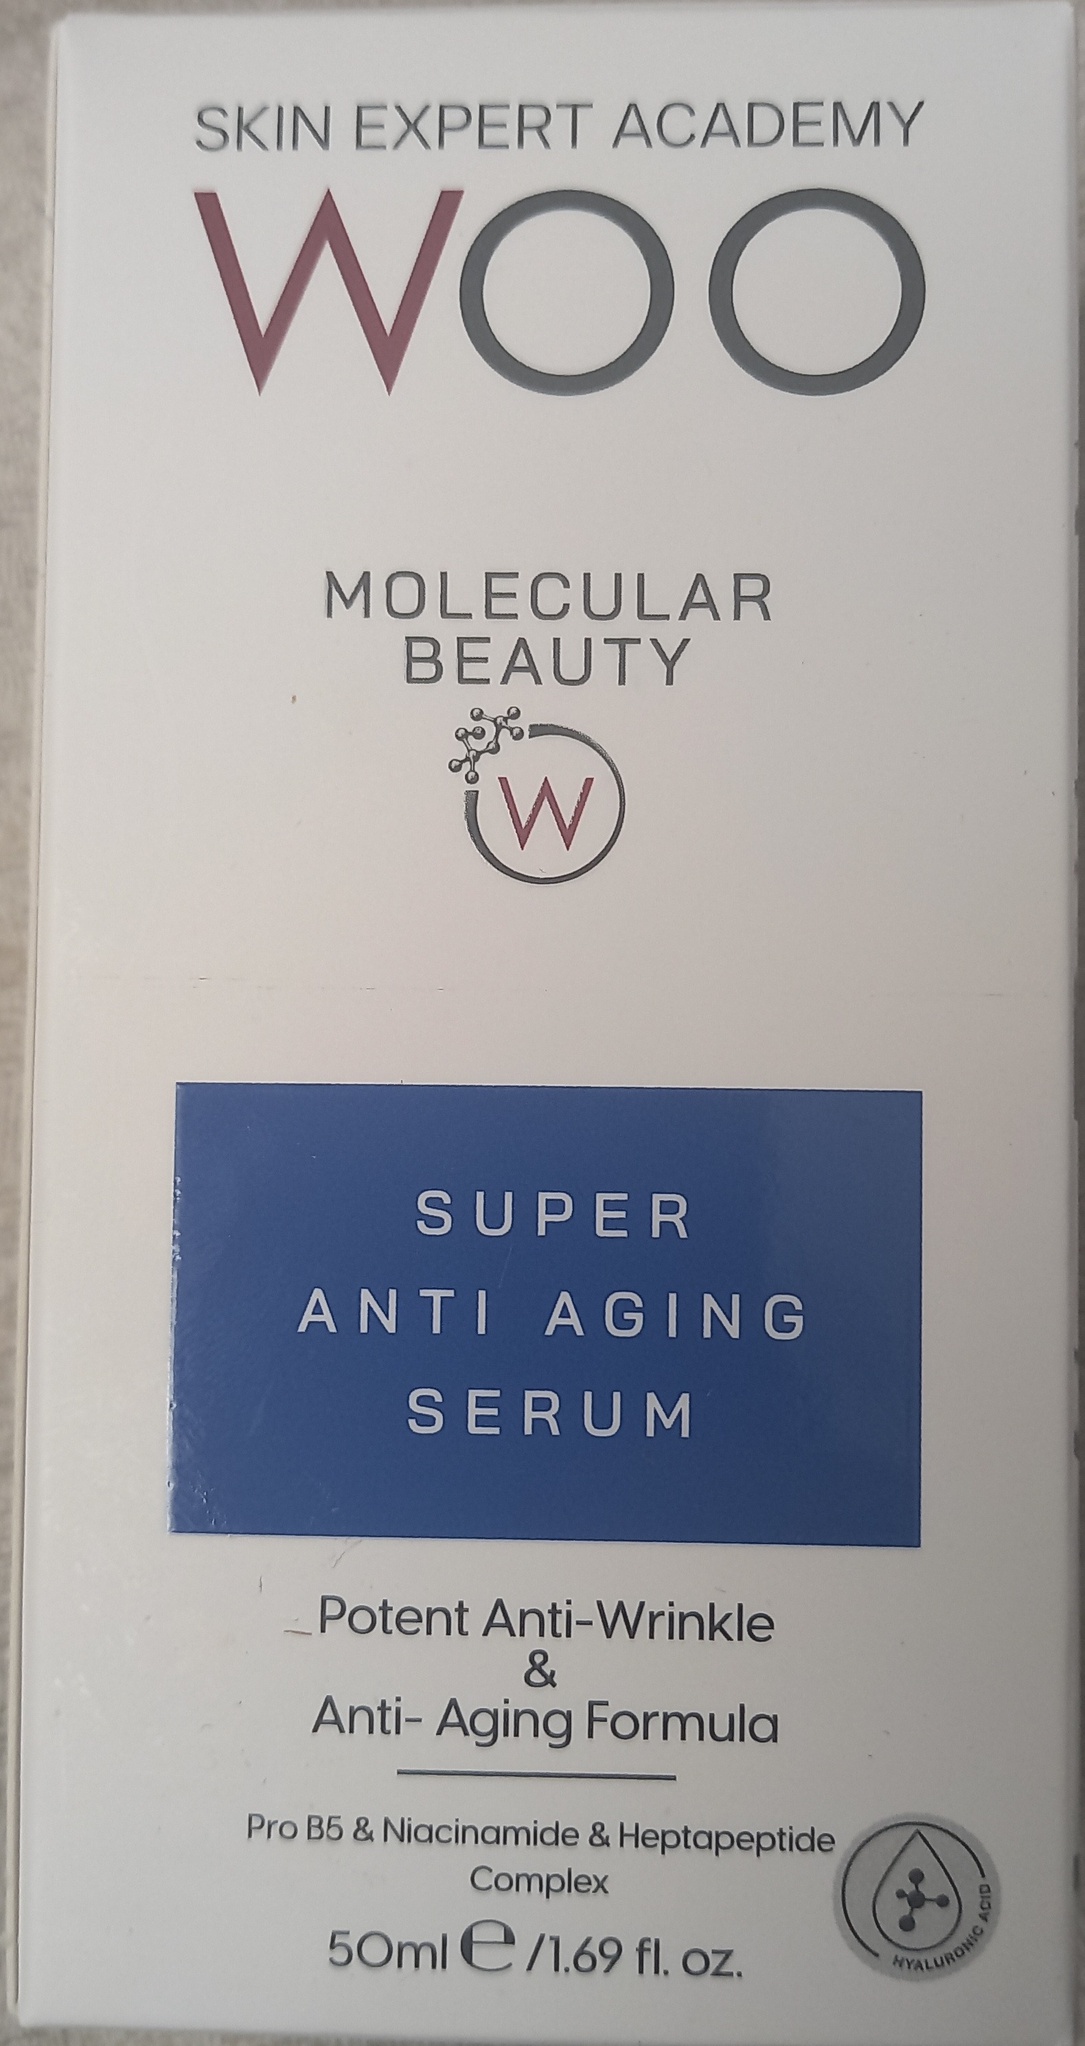 Woo Skin Expert Academy Anti Aging Serum